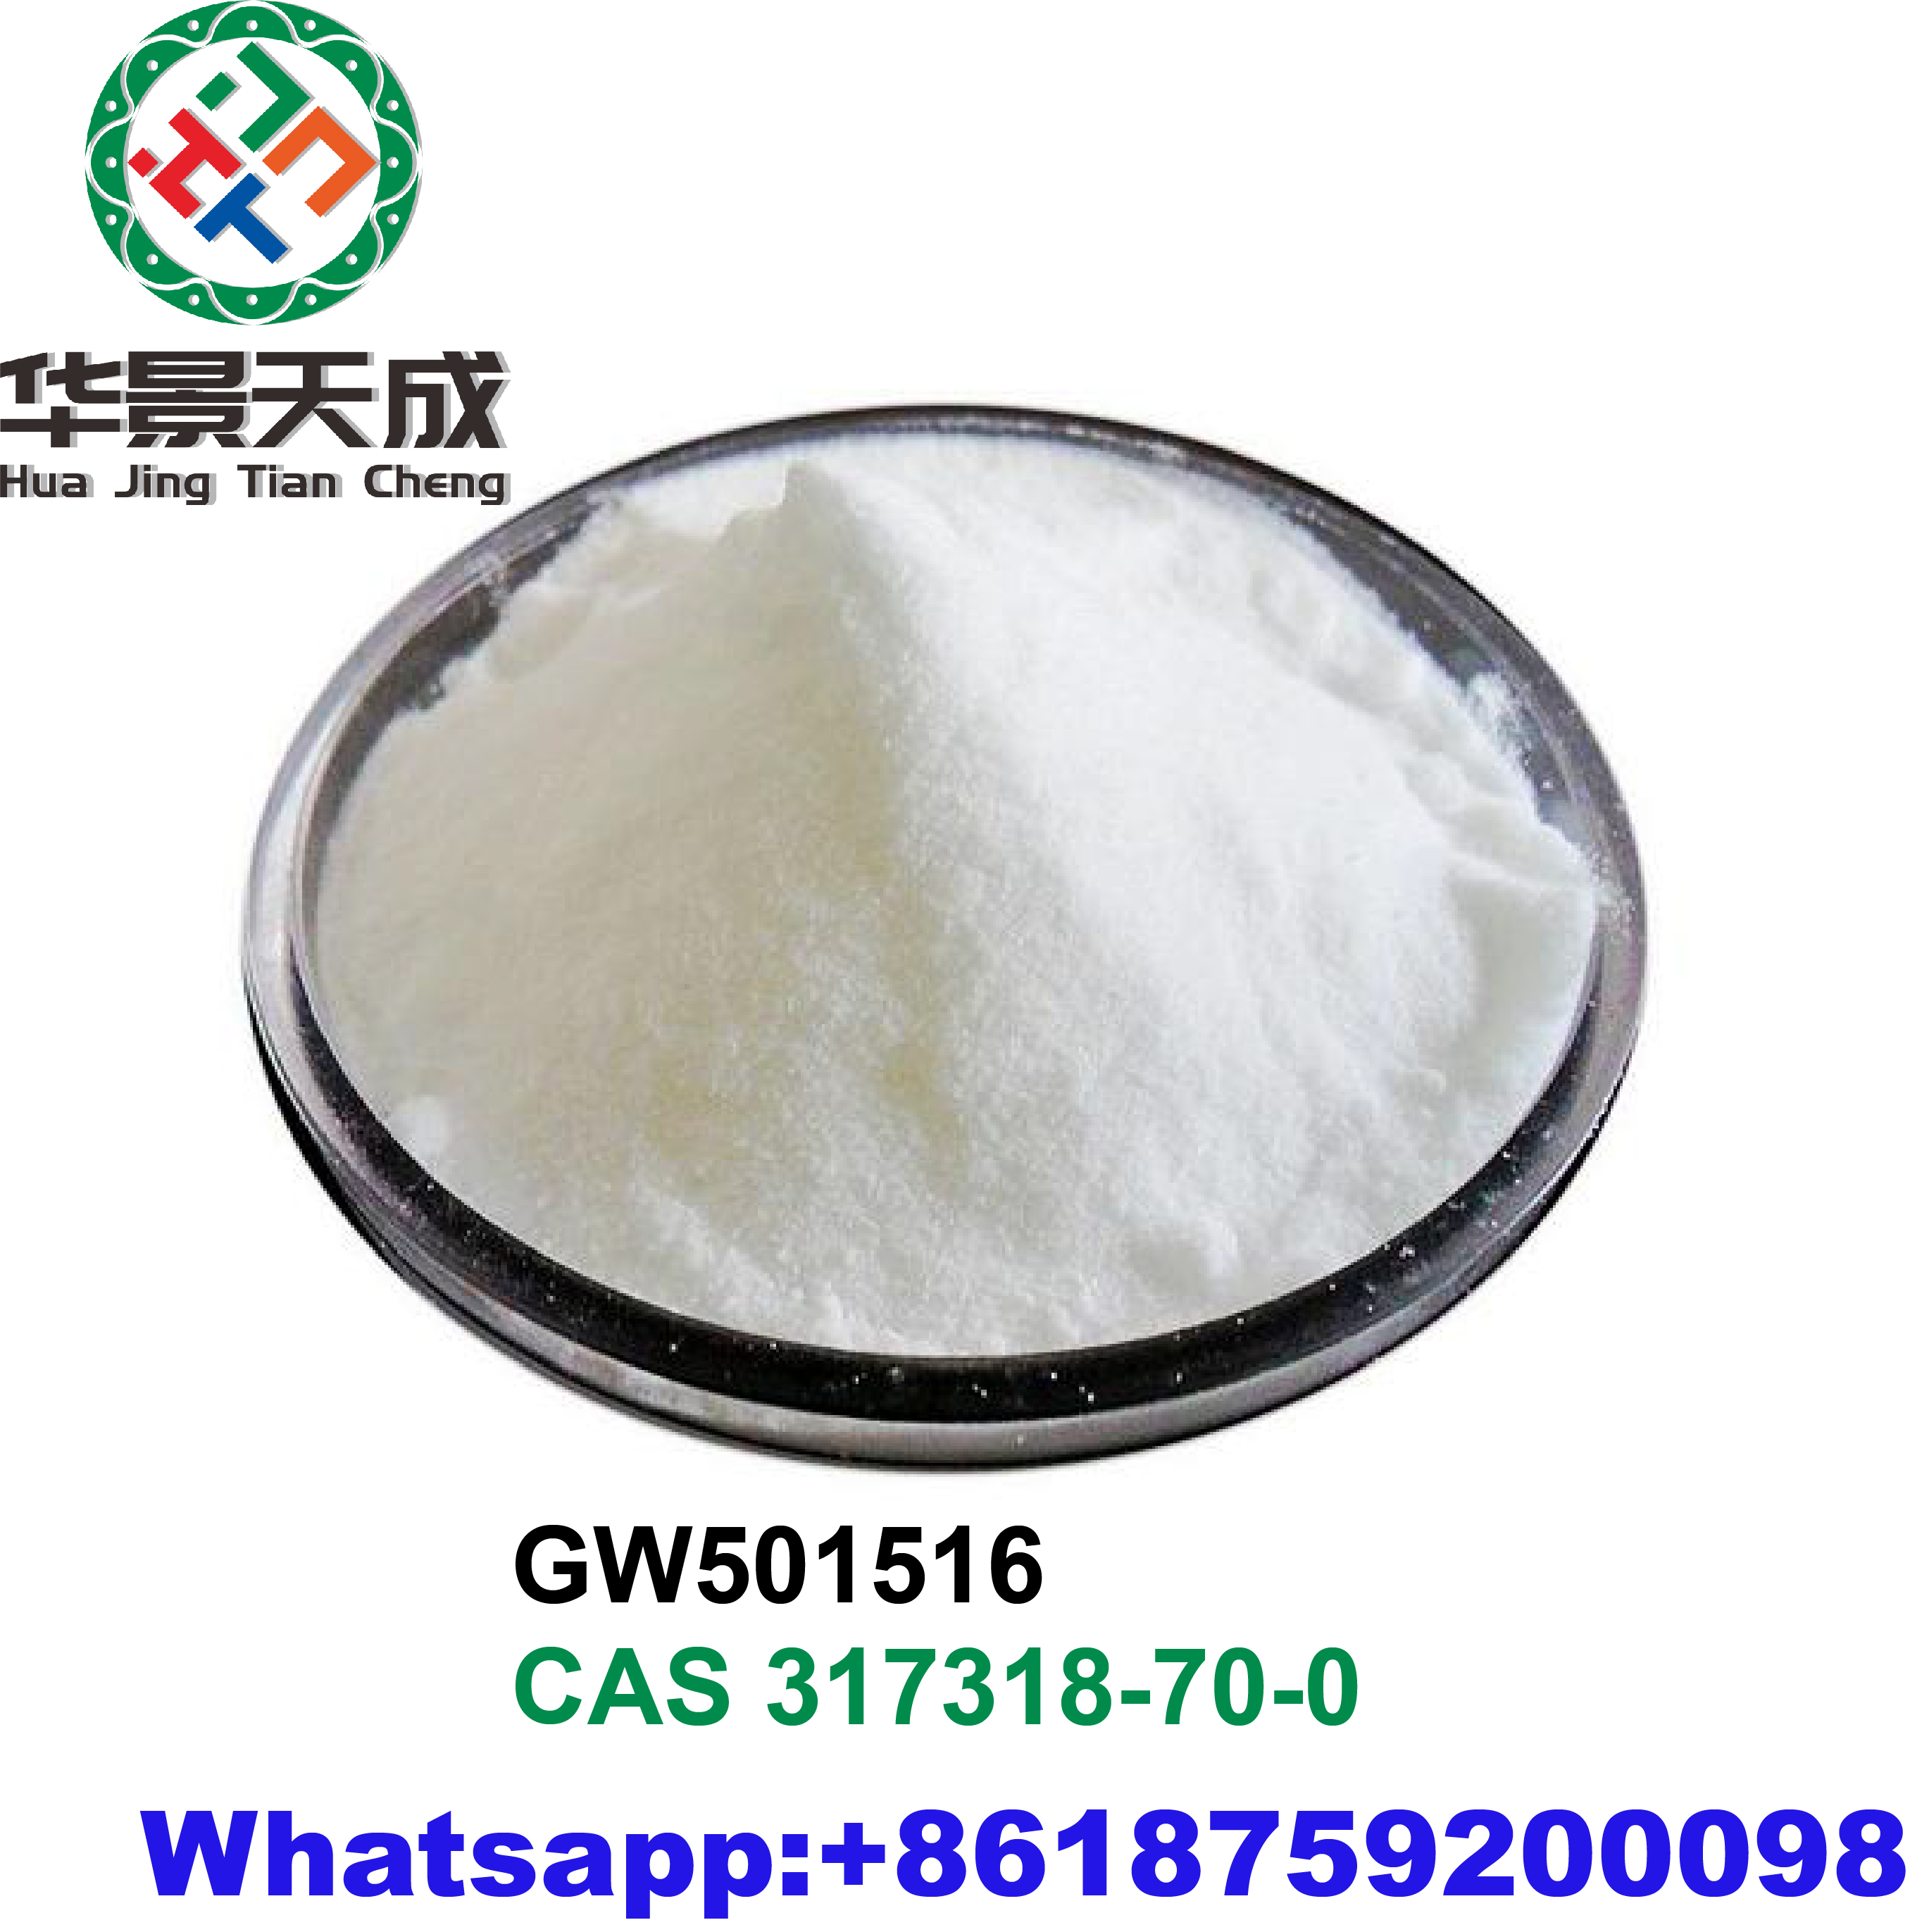 Sarm Metabolic Modulator Gw501516 Muscle Mass Steroids White Powder 317318-70-0 Featured Image